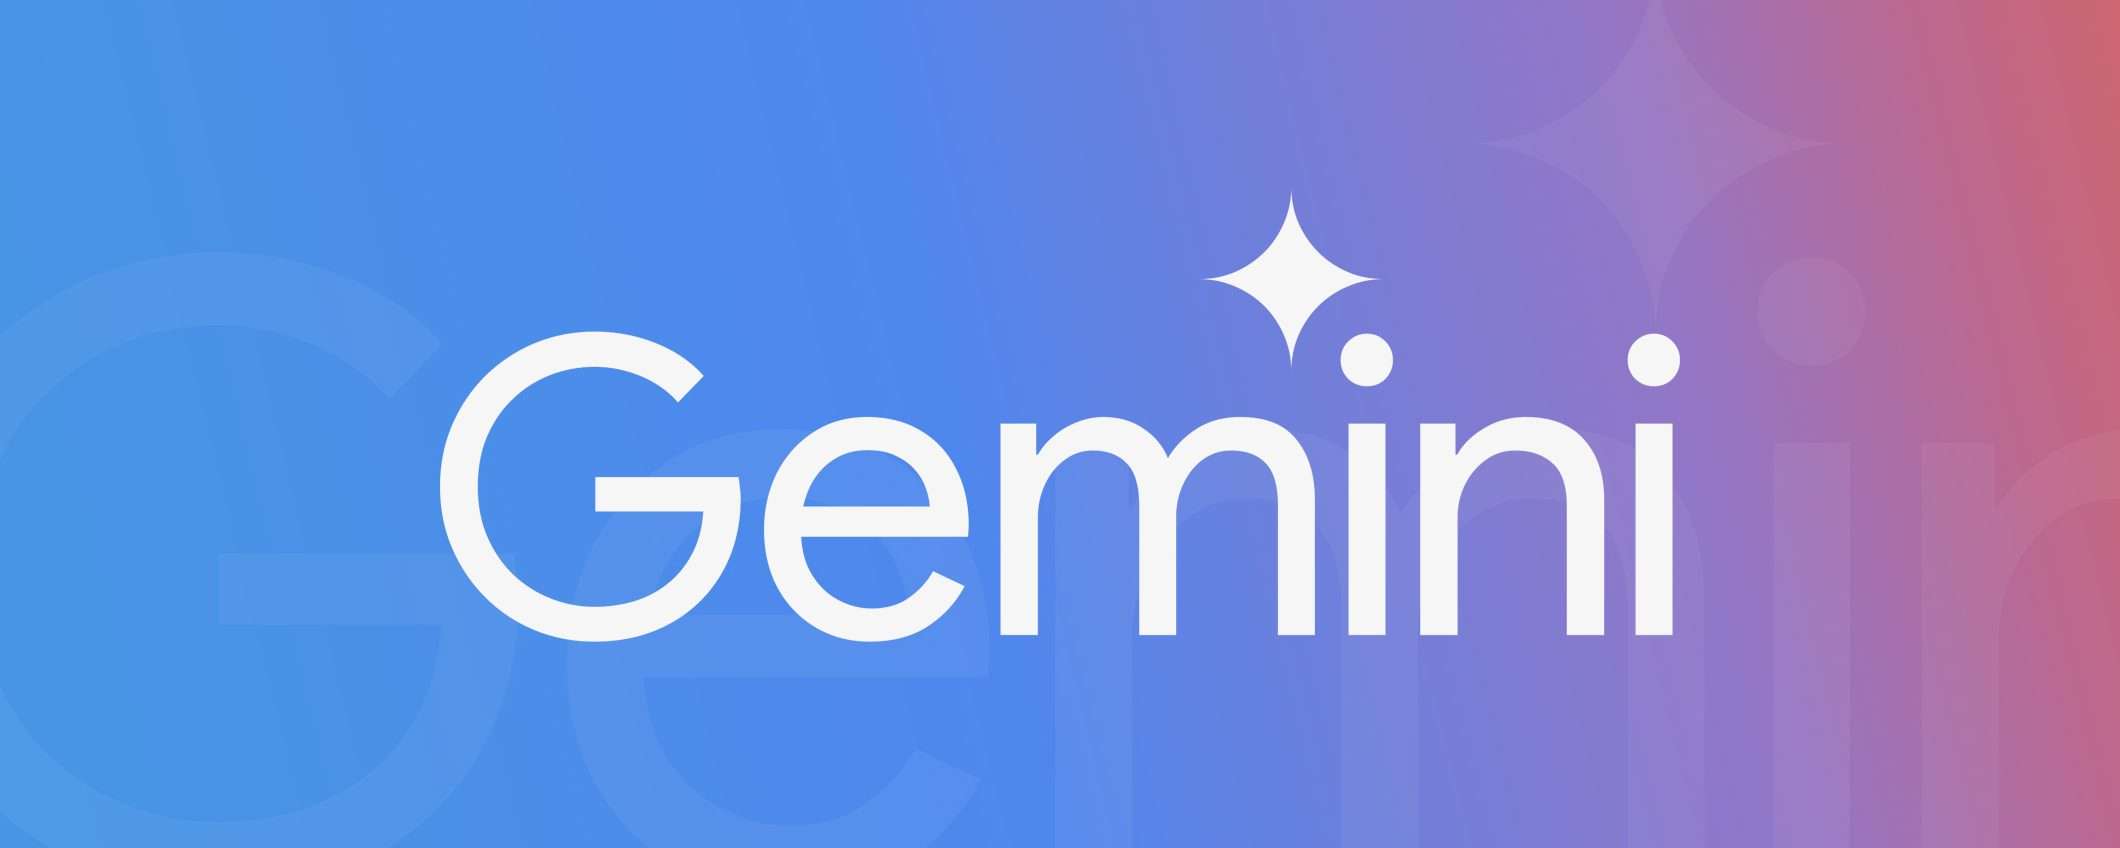 Gemini tornerà a creare immagini nelle prossime settimane